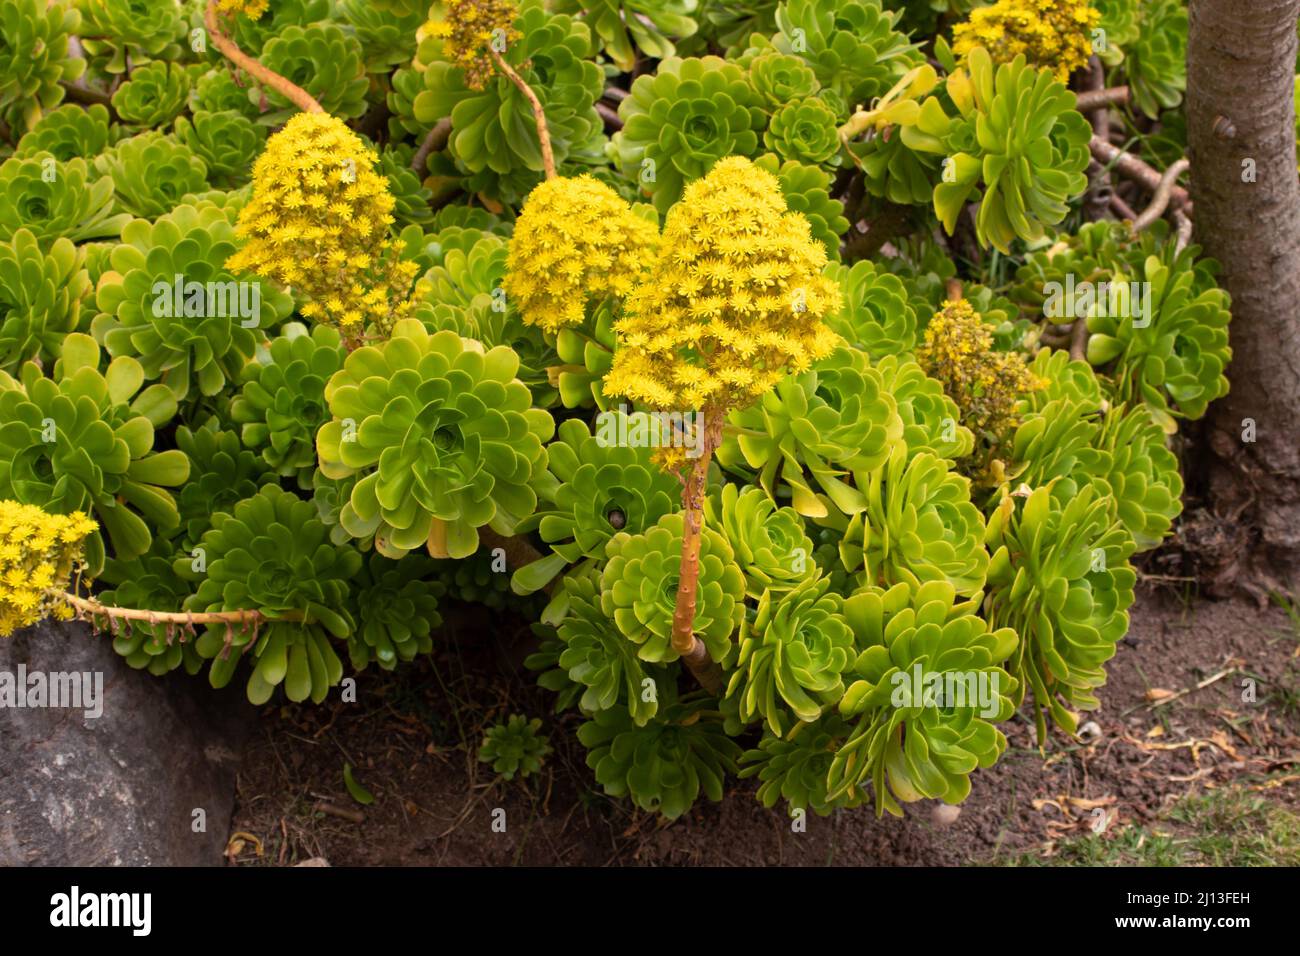 Aeonium arboreum or tree aeonium flowering plants with yellow conical inflorescences Stock Photo